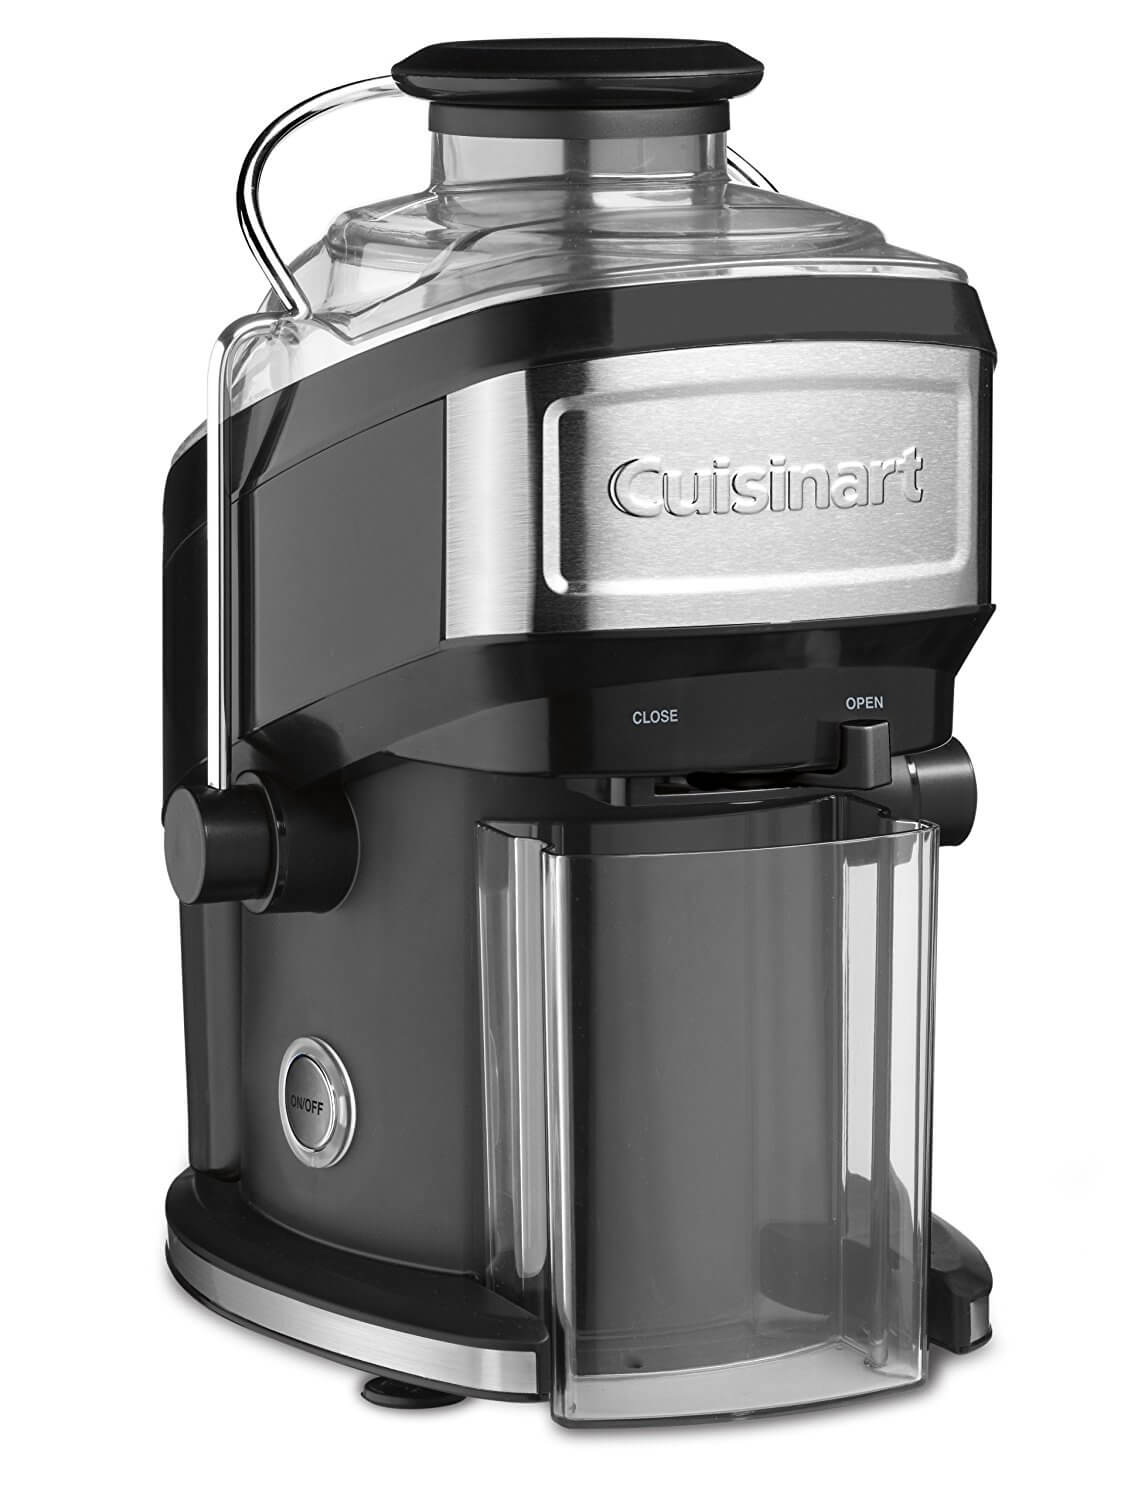 Cuisinart Juicer - Cuisinart Juice Extractor CJE-500 Compact 